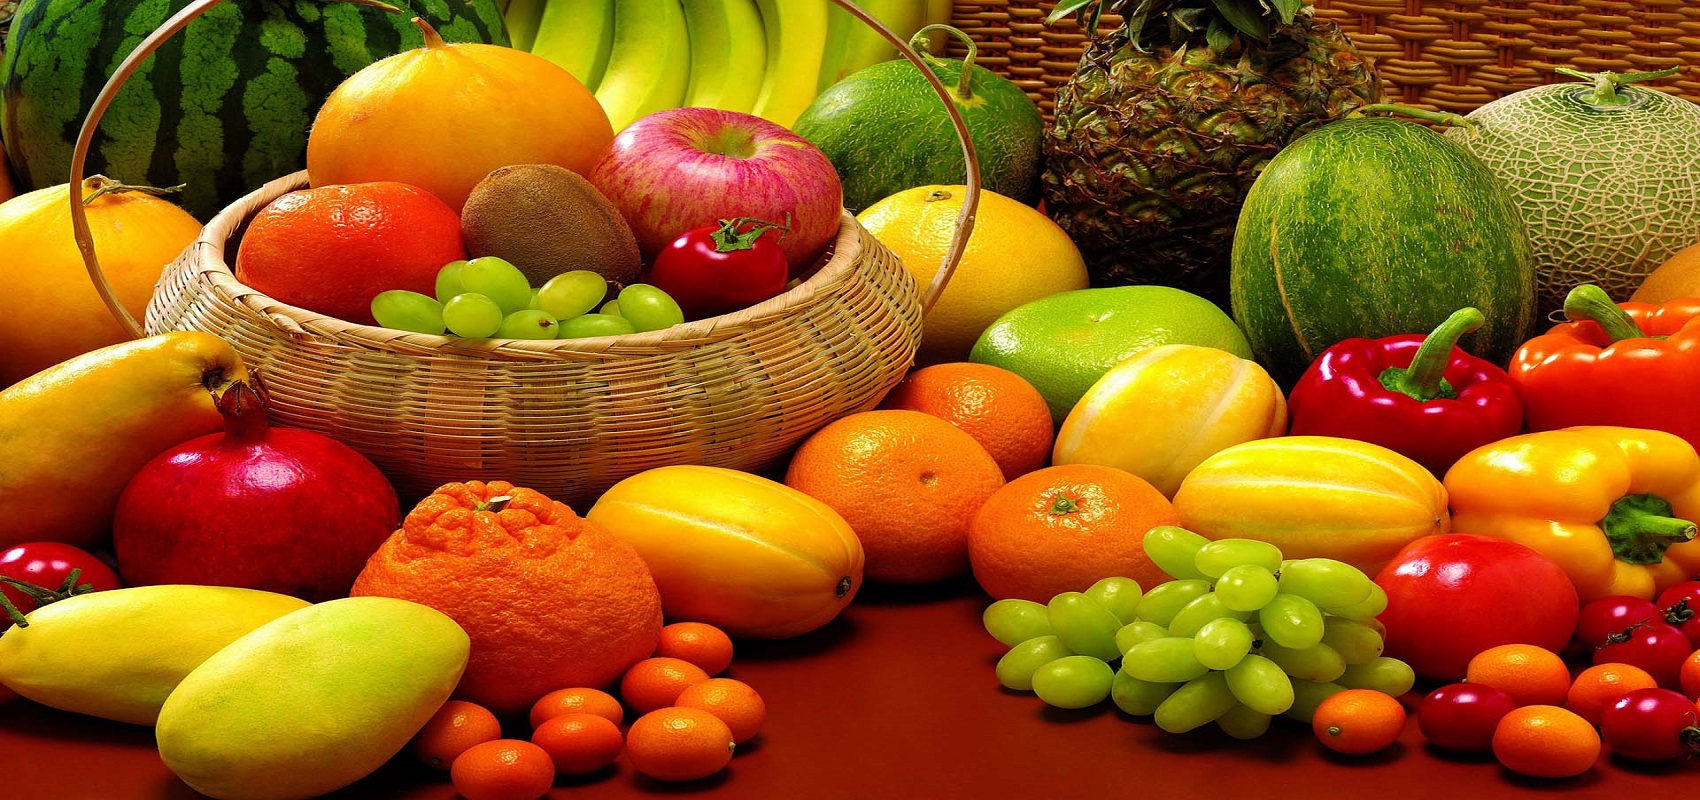 баннер овощи фрукты фото